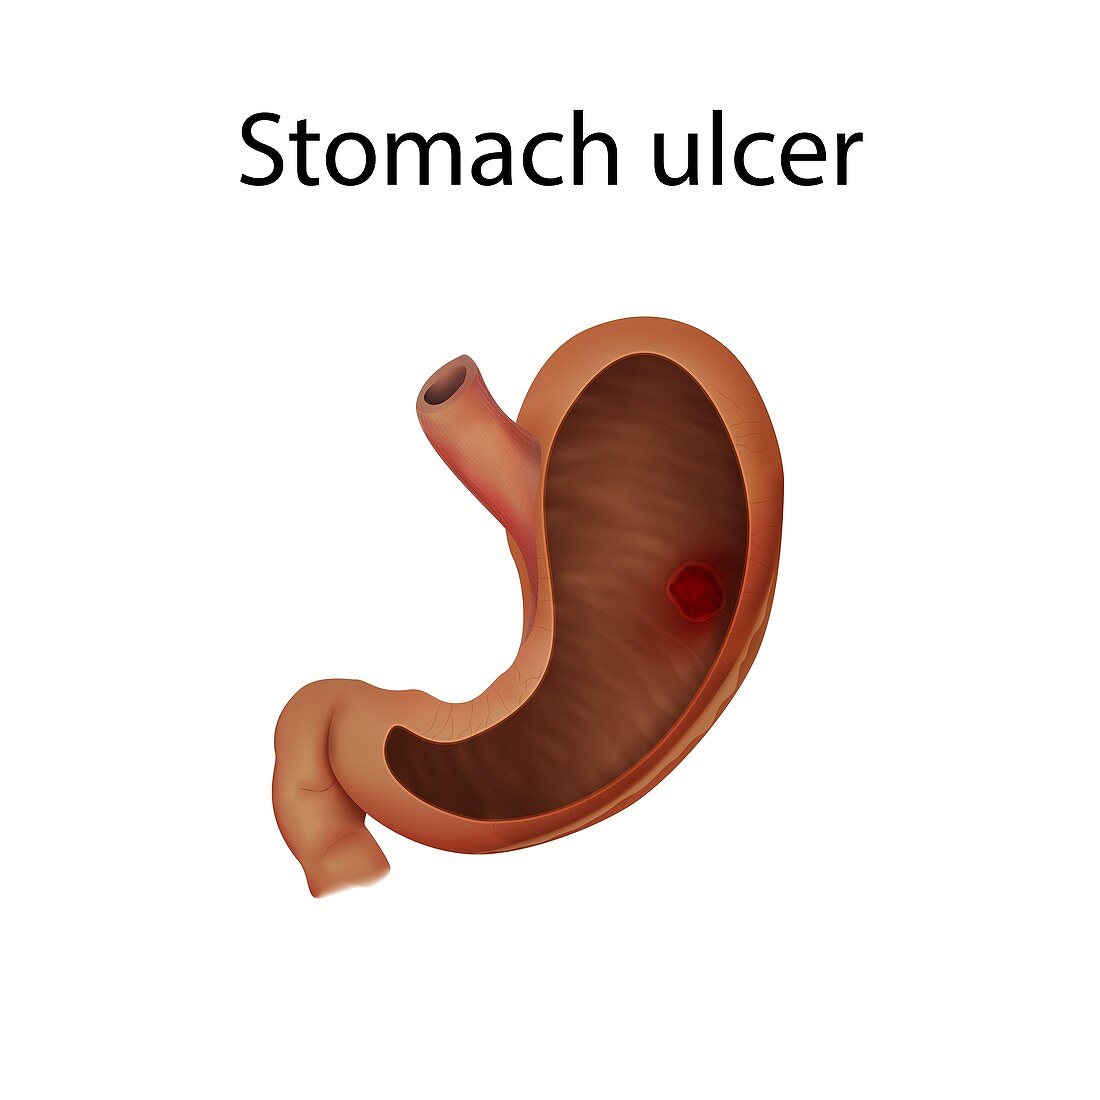 Stomach ulcer, illustration